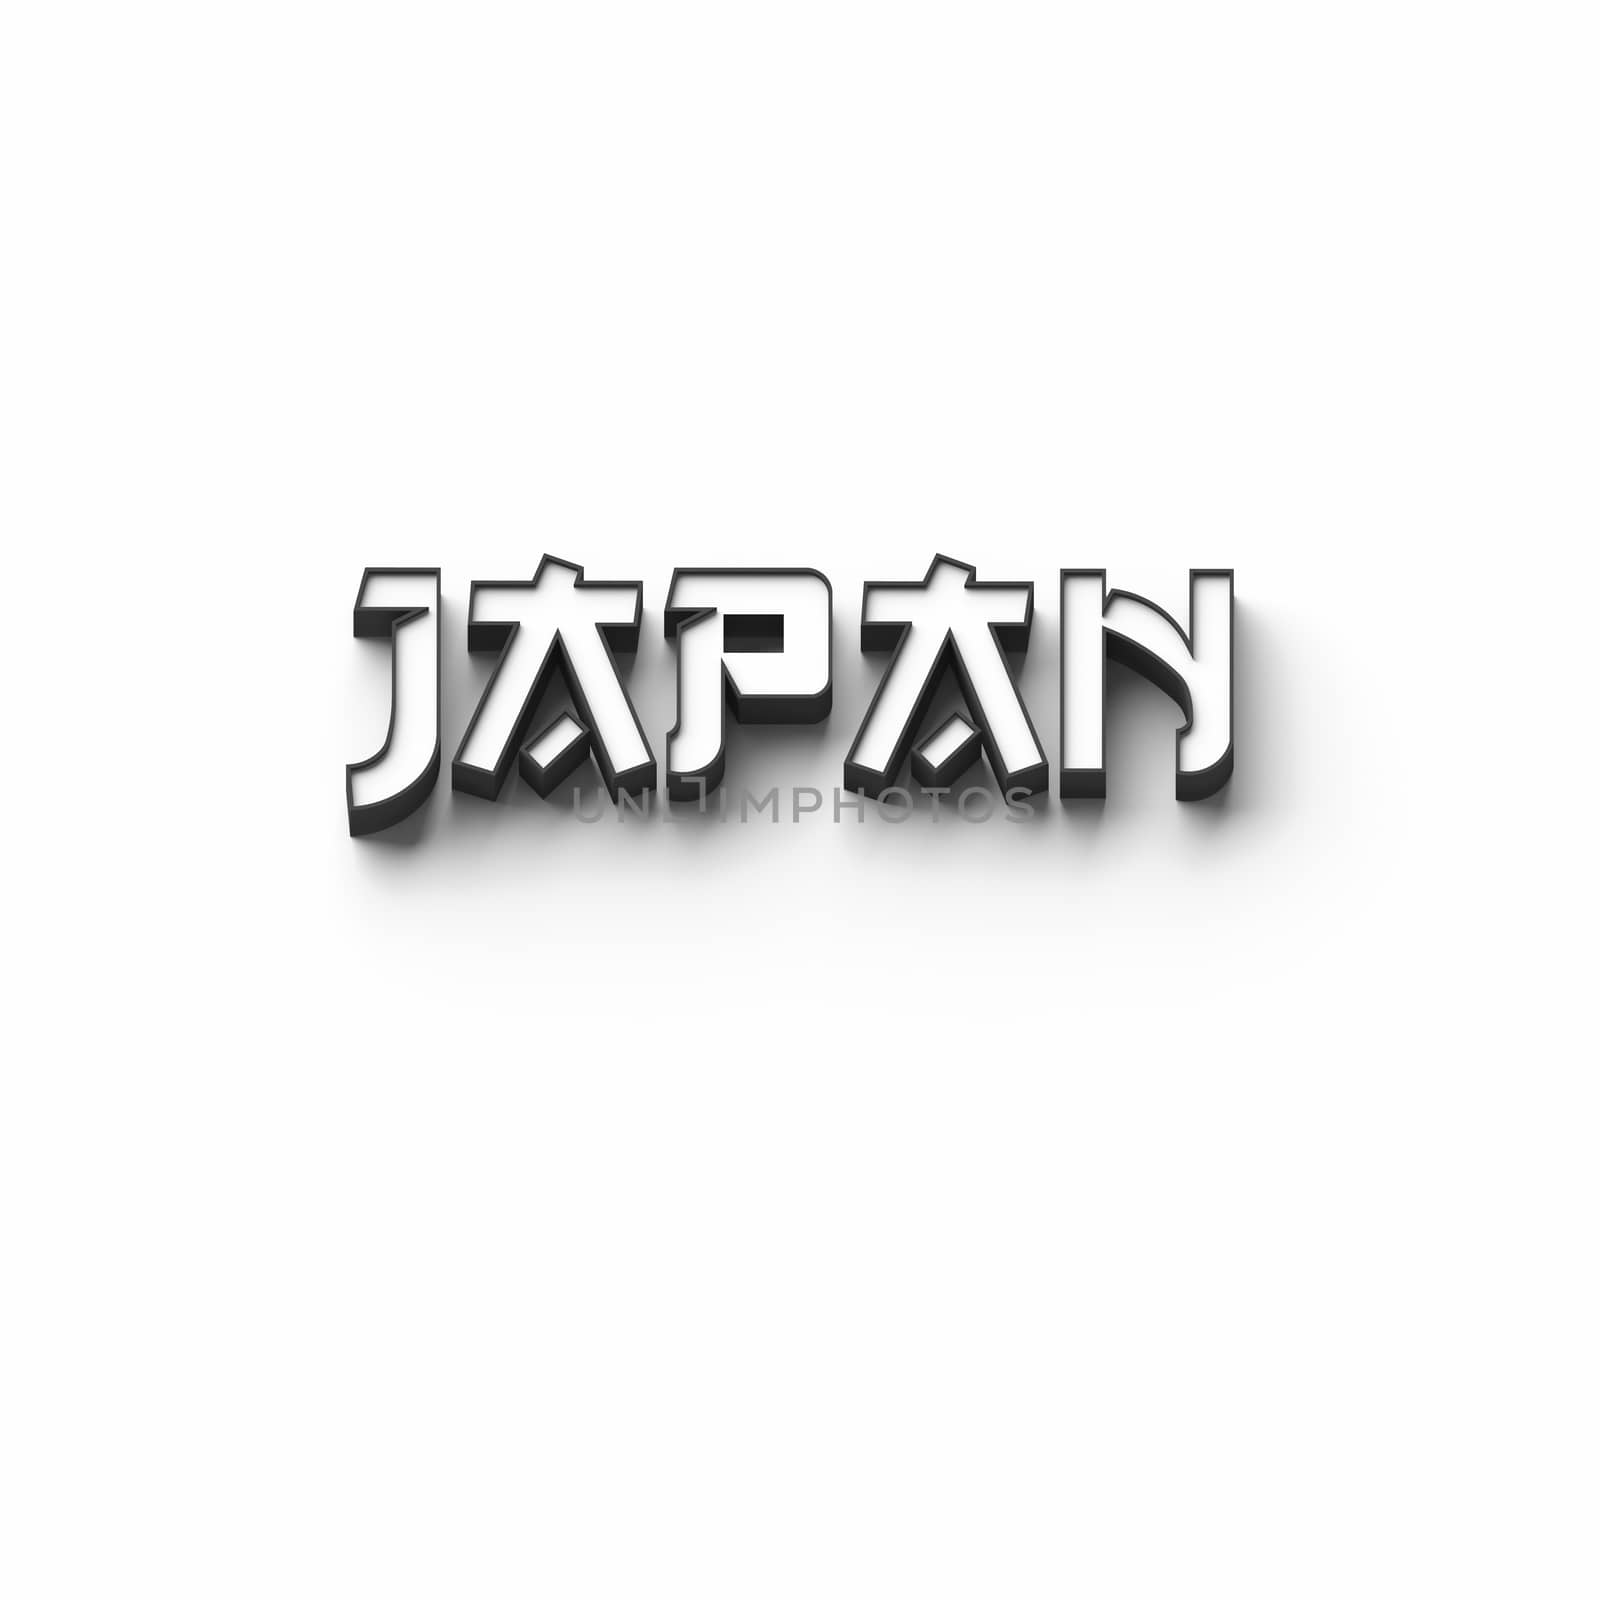 3D RENDERING WORDS 'JAPAN' ON RED PLAIN BACKGROUND